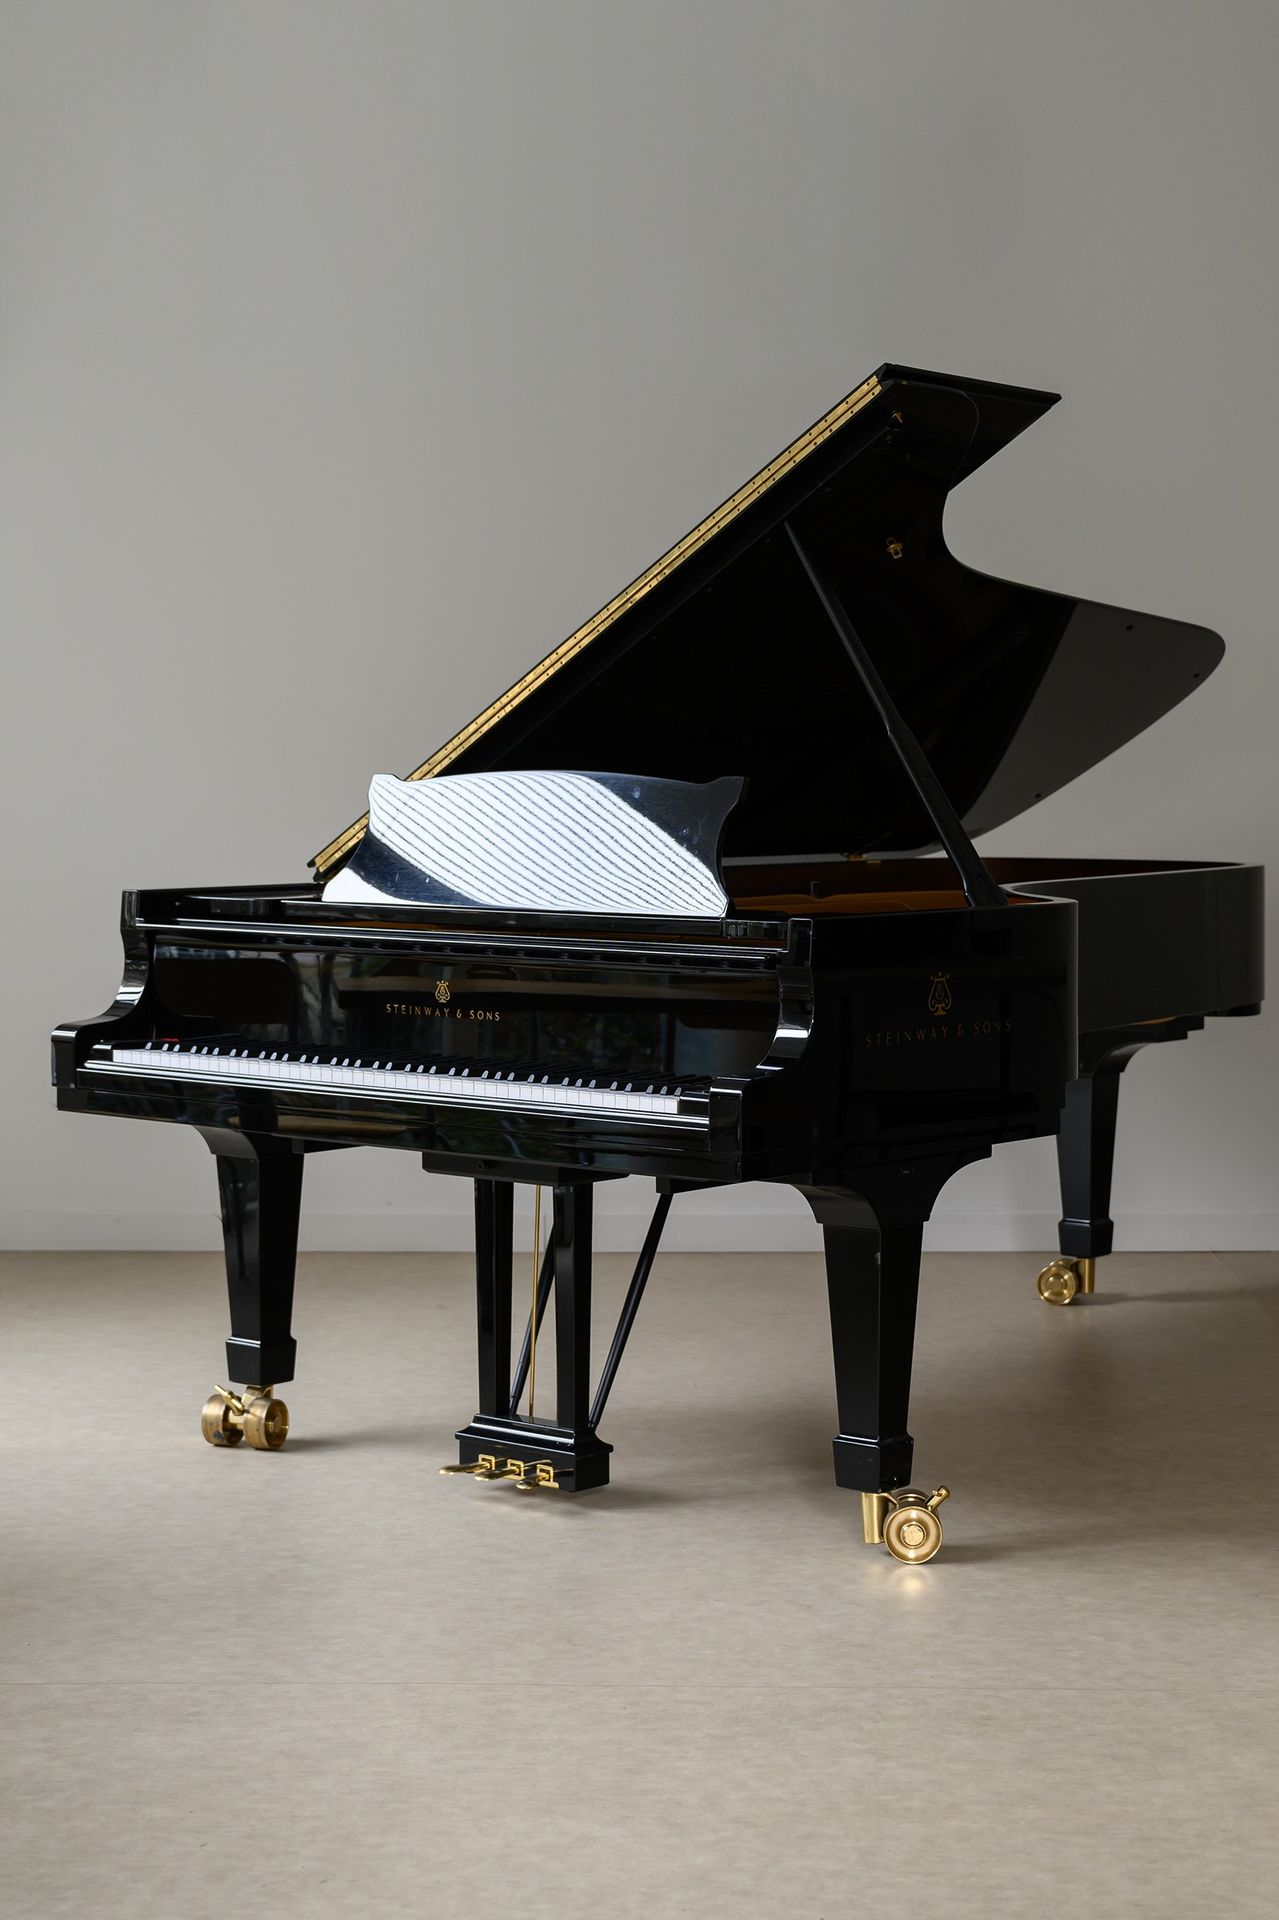 Null 第 33 号拍卖品：施坦威三角音乐会钢琴，D 型，序列号 589261，2011 年新购。2011年至2021年期间作为主要音乐会乐器使用。
参观时间&hellip;